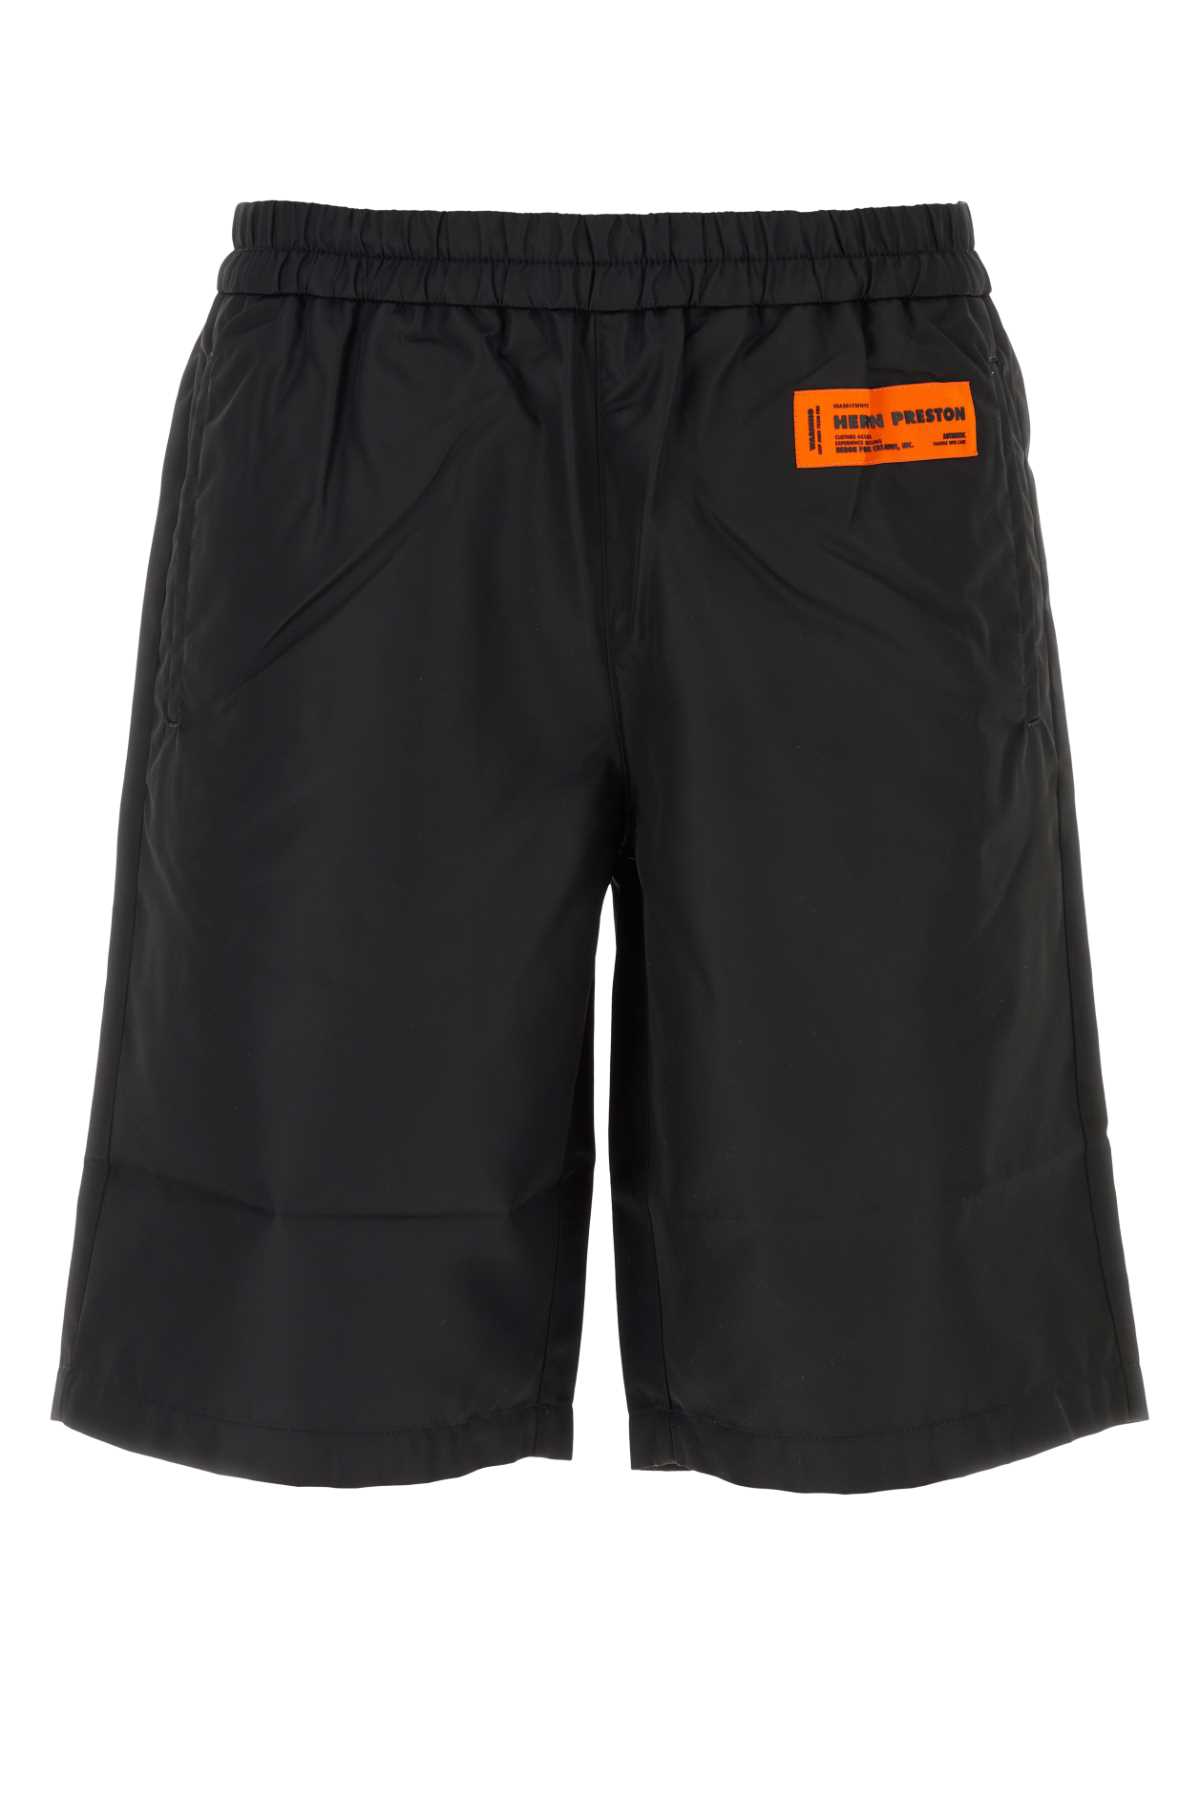 Black Nylon Swimming Shorts